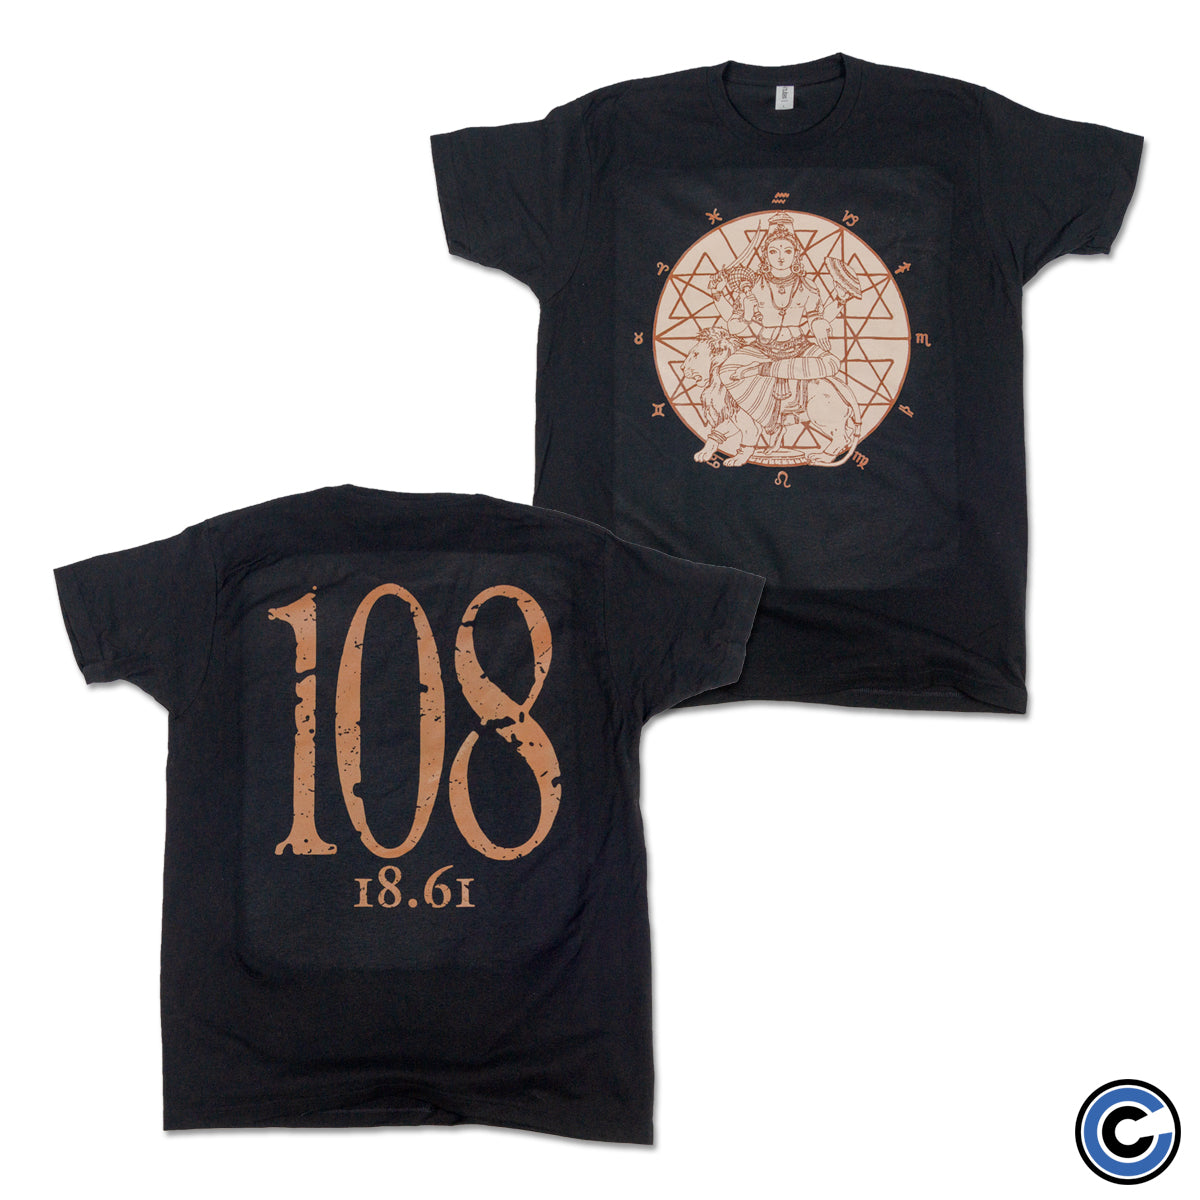 108 "18.61" Shirt